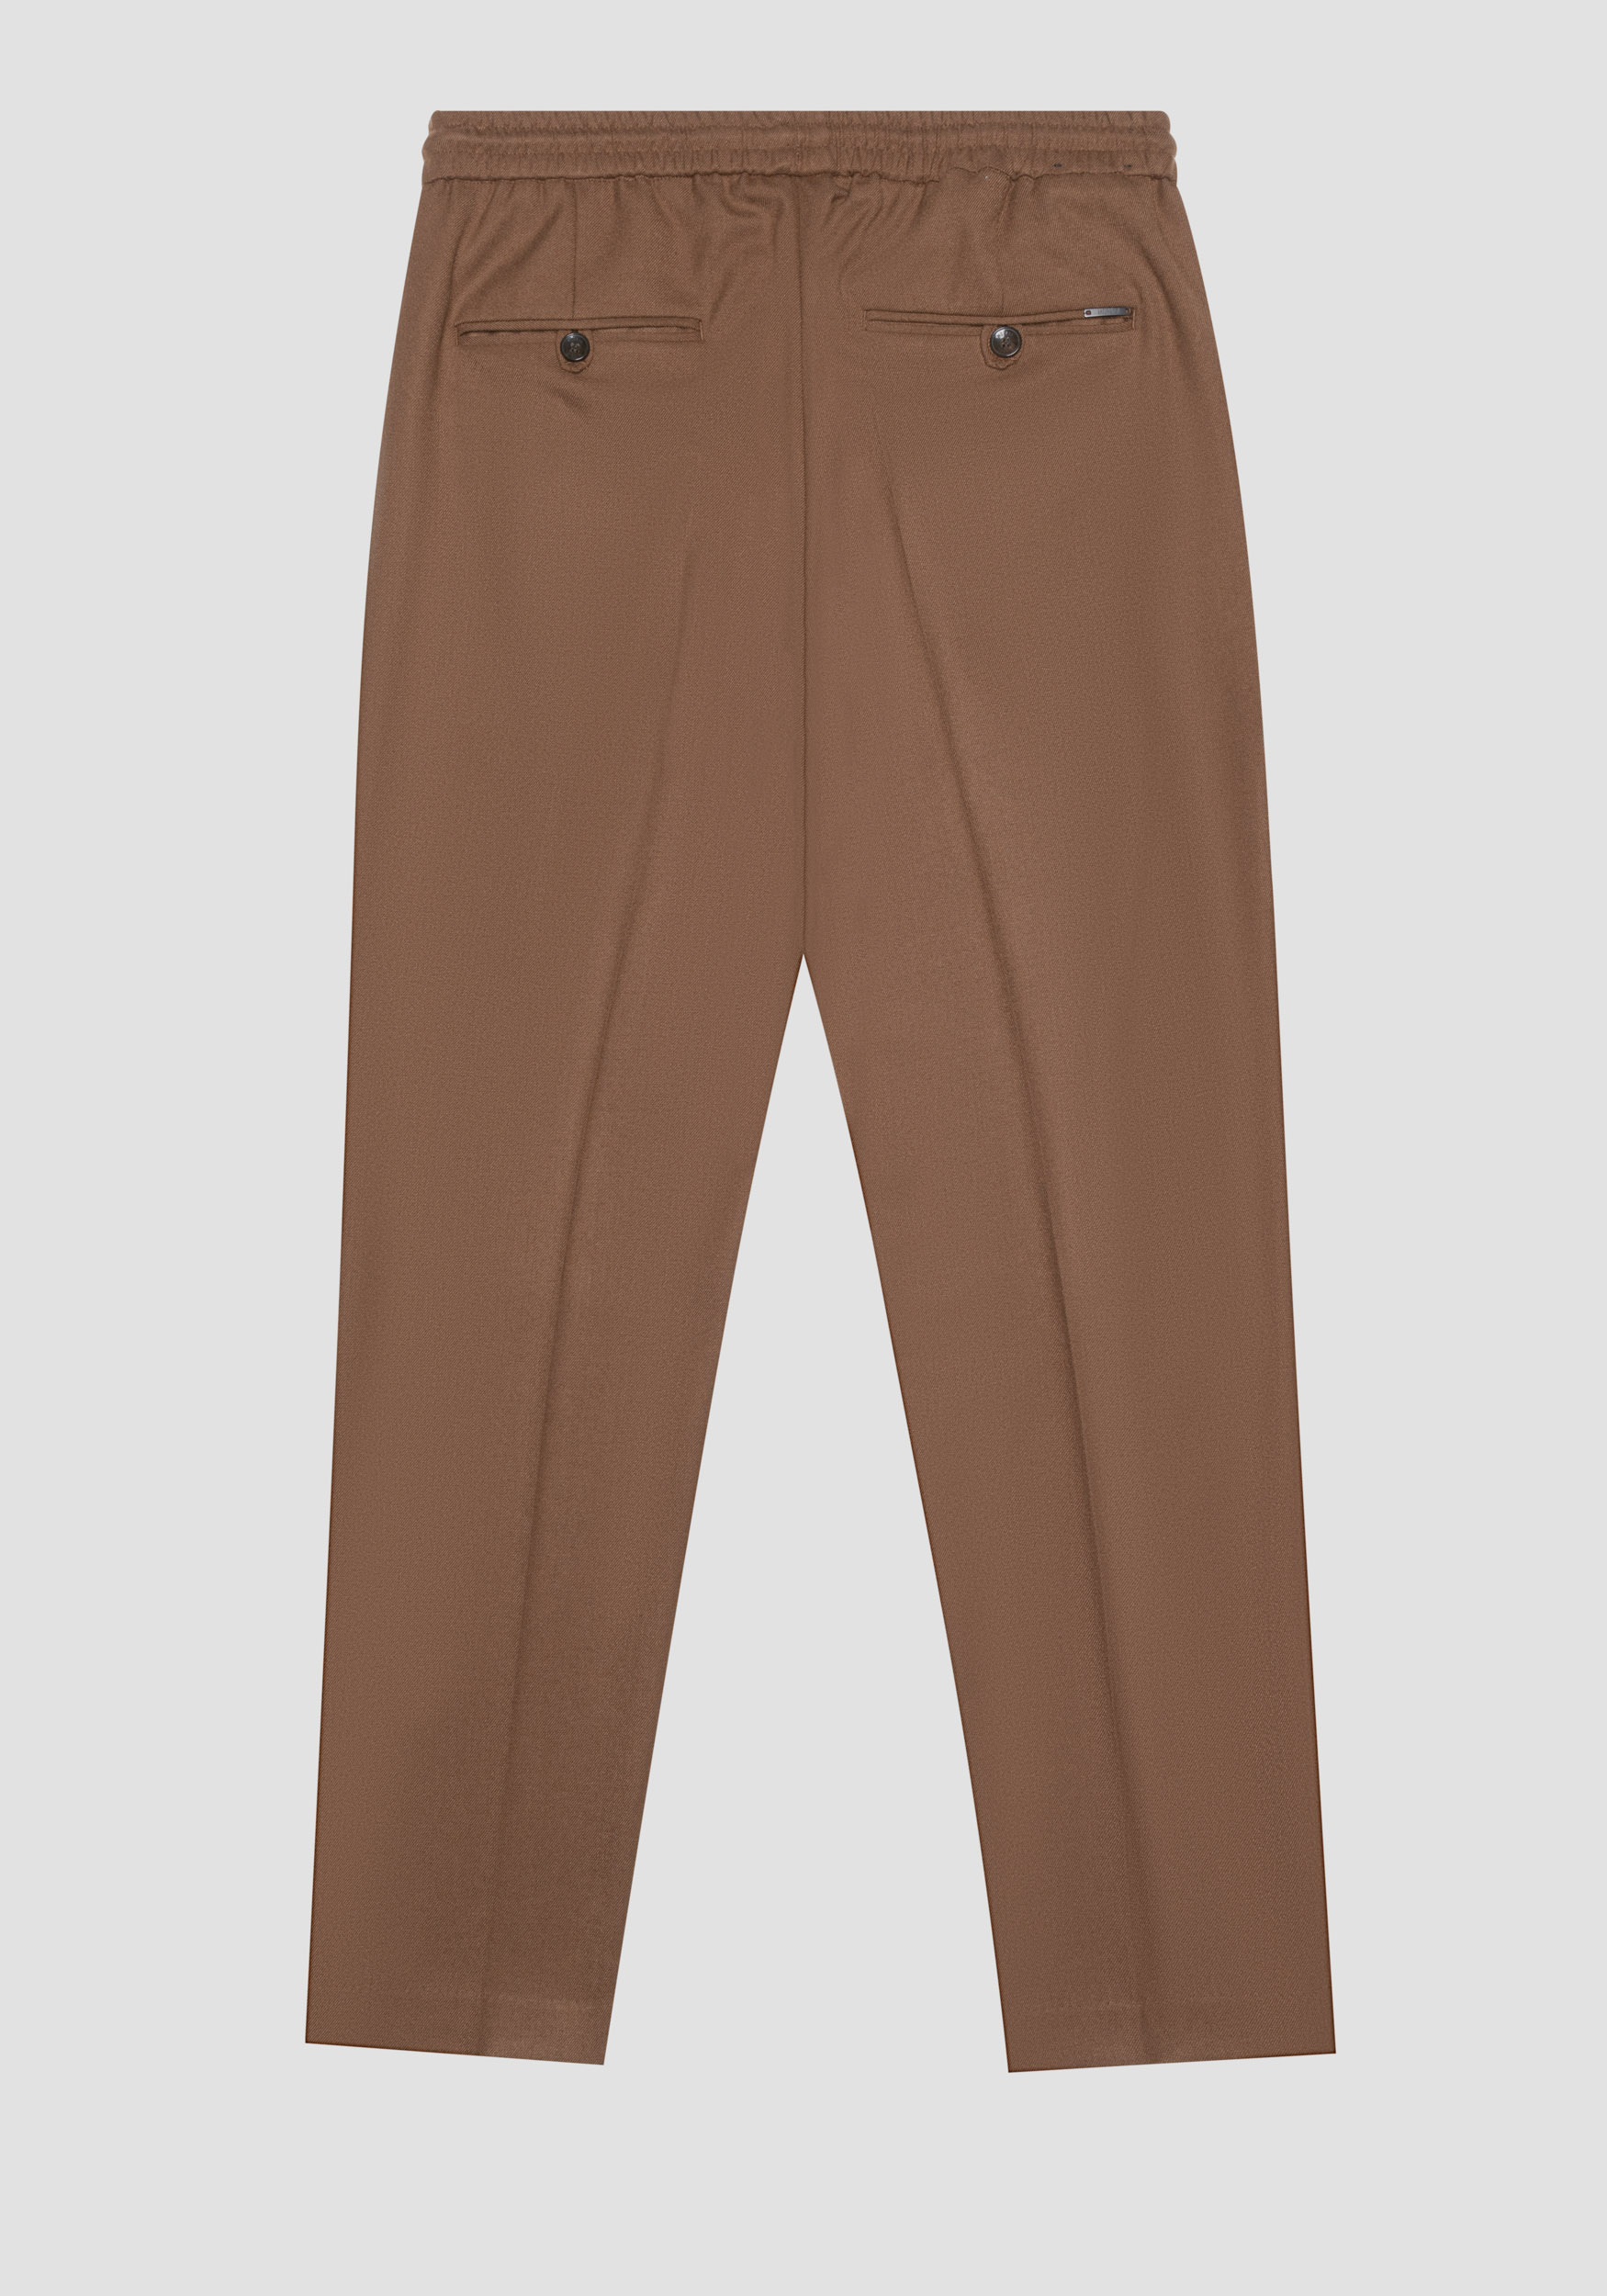 Antony Morato Pantalon Regular Fit Neil En Tissu De Viscose Melangee Elastique Caramel | Homme Pantalons